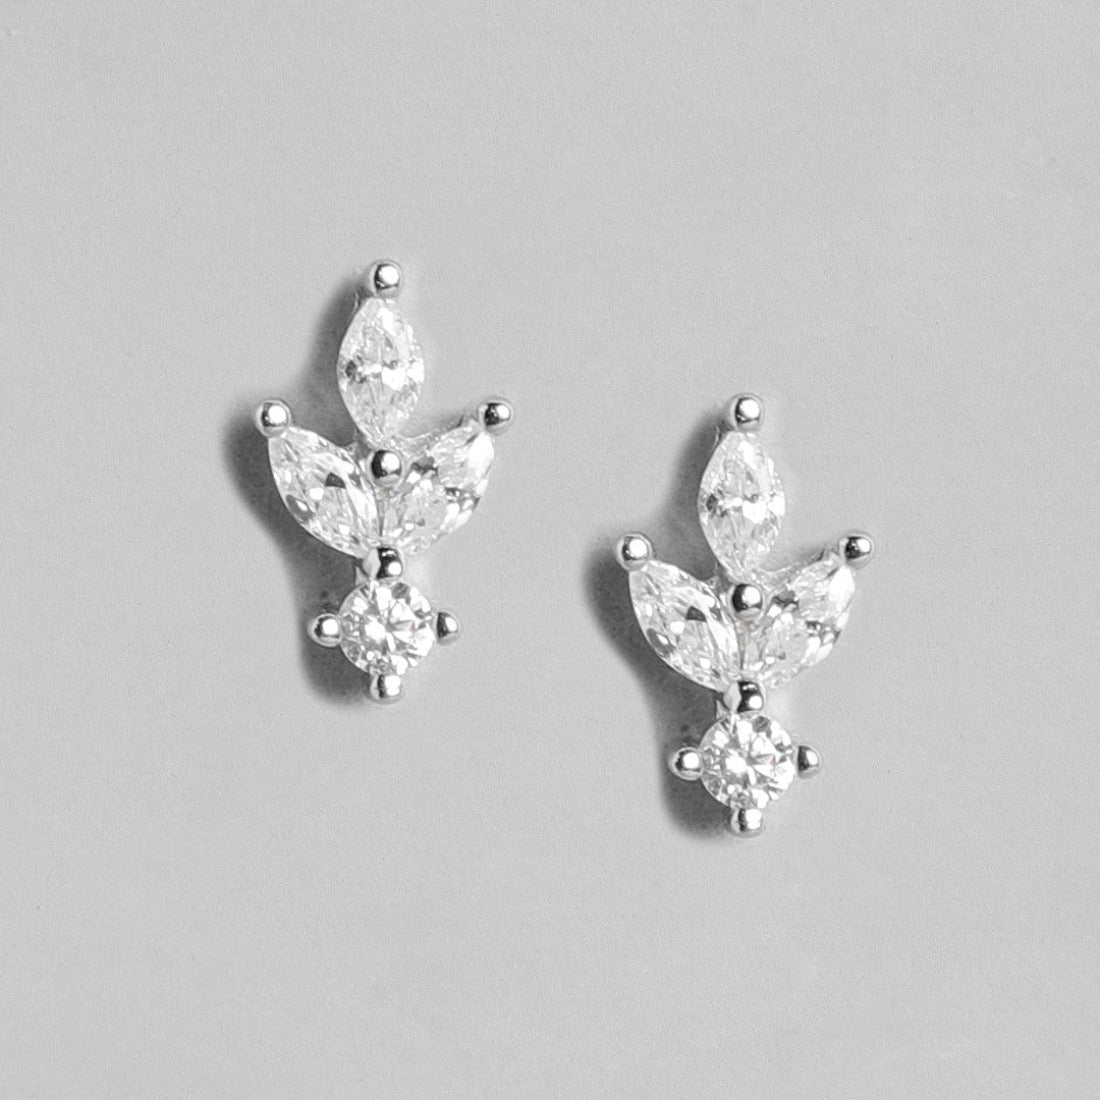 Embellished Leaf 925 Sterling Silver Earrings in South Screw